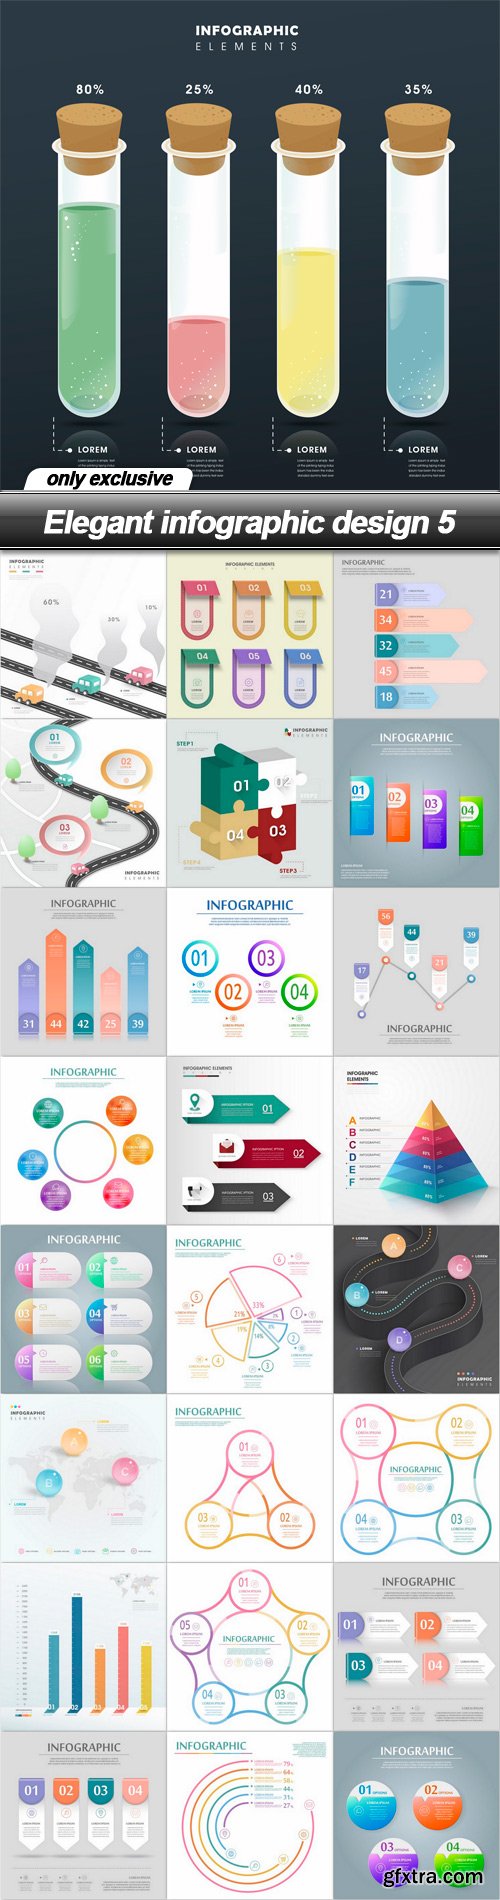 Elegant infographic design 5 - 25 EPS